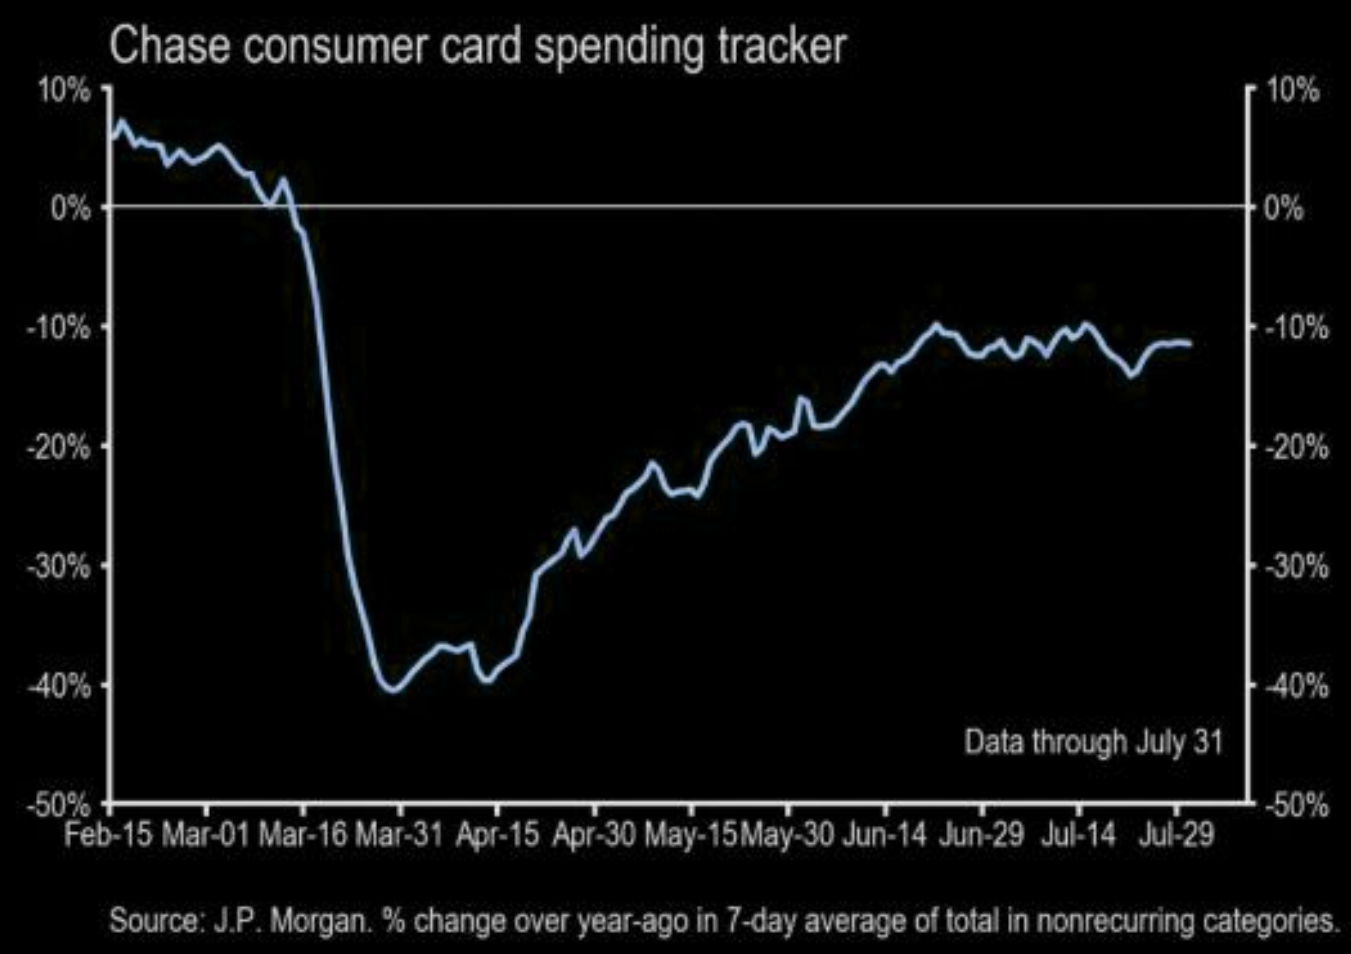 Consumer card spending tracker: stuck at -10% 